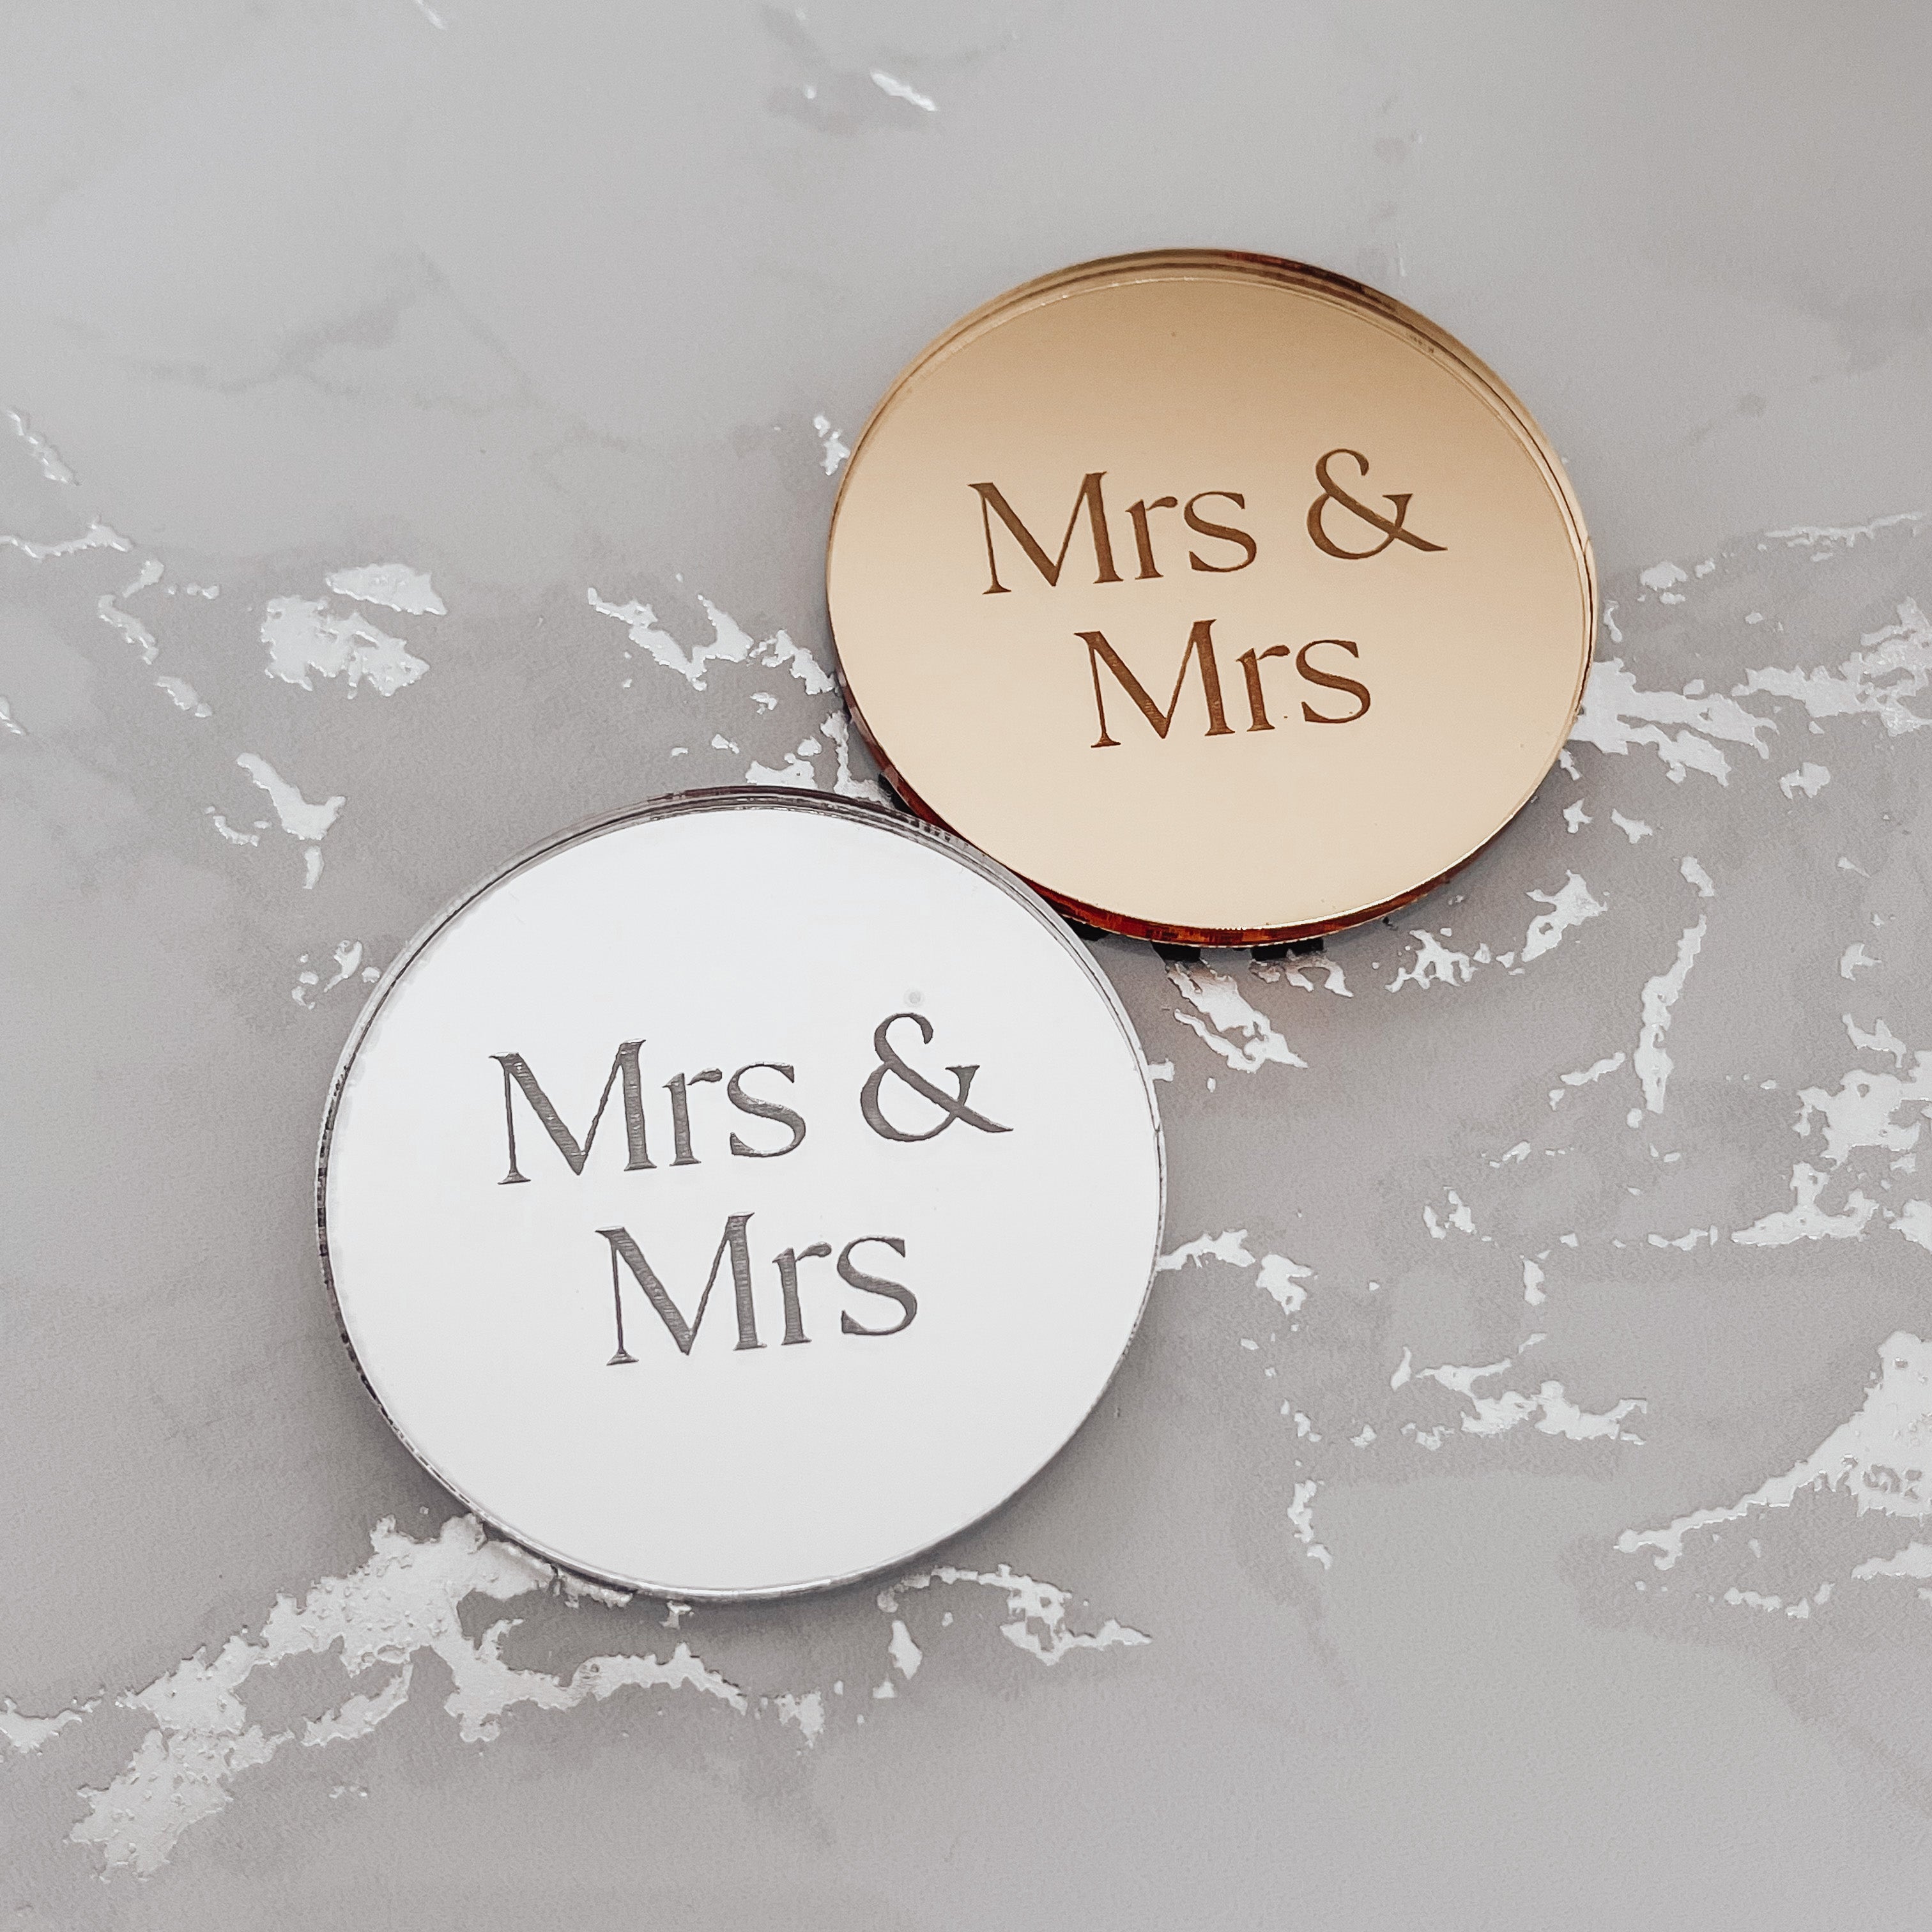 Mrs & Mrs Cake Charms